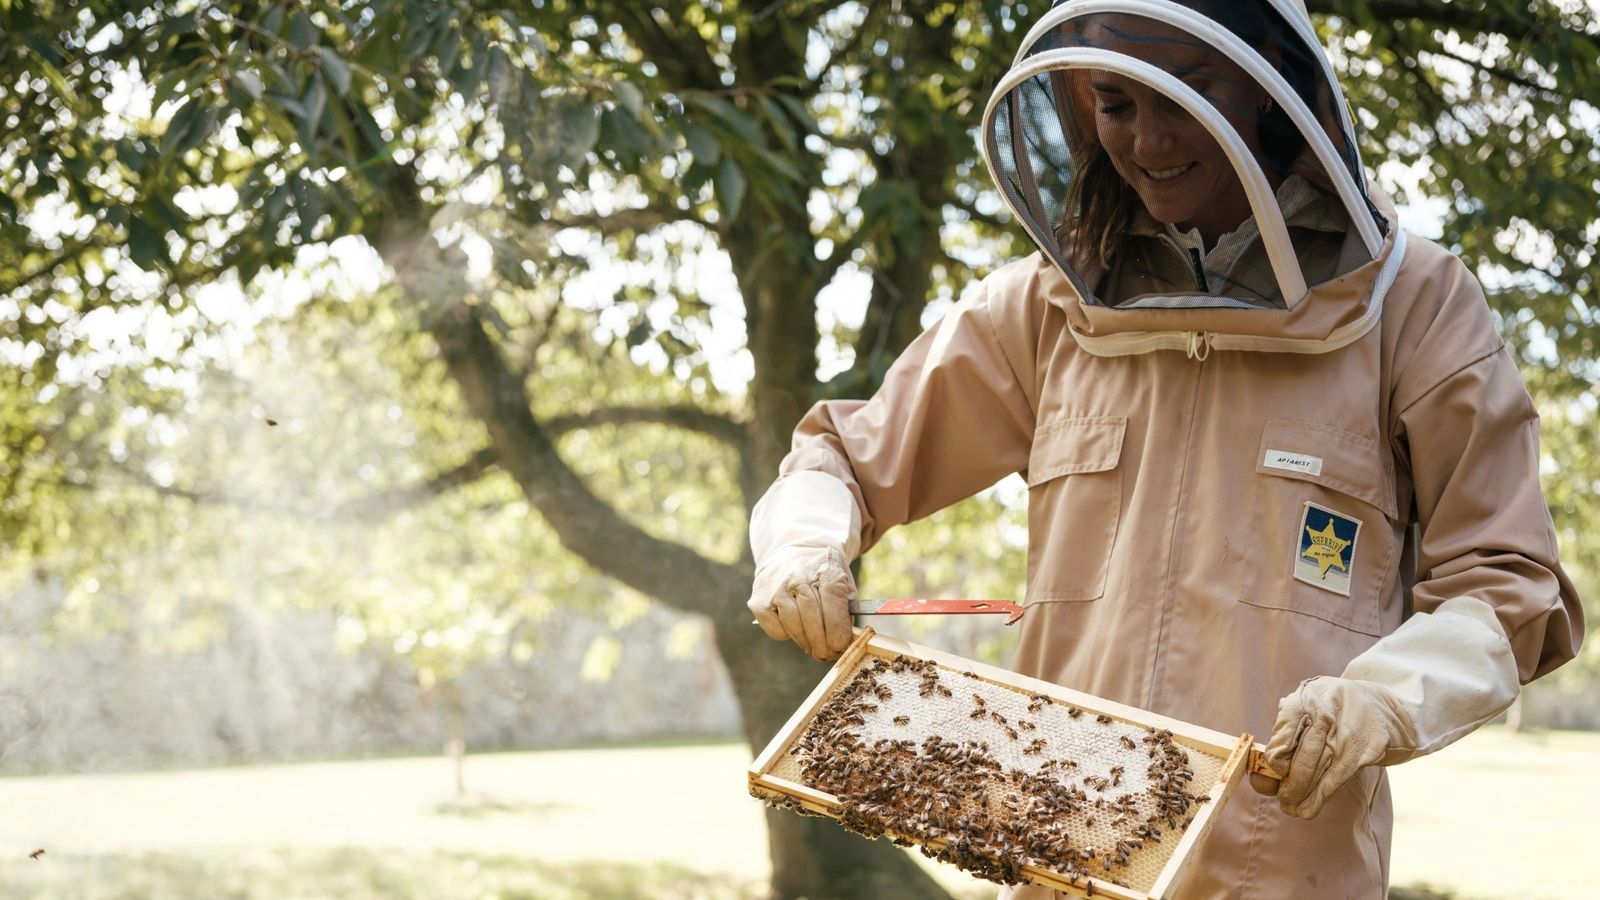 Princess of Wales mengenakan setelan pengawal untuk merawat sarang lebah pada Hari Lebah Sedunia |  Berita Inggris